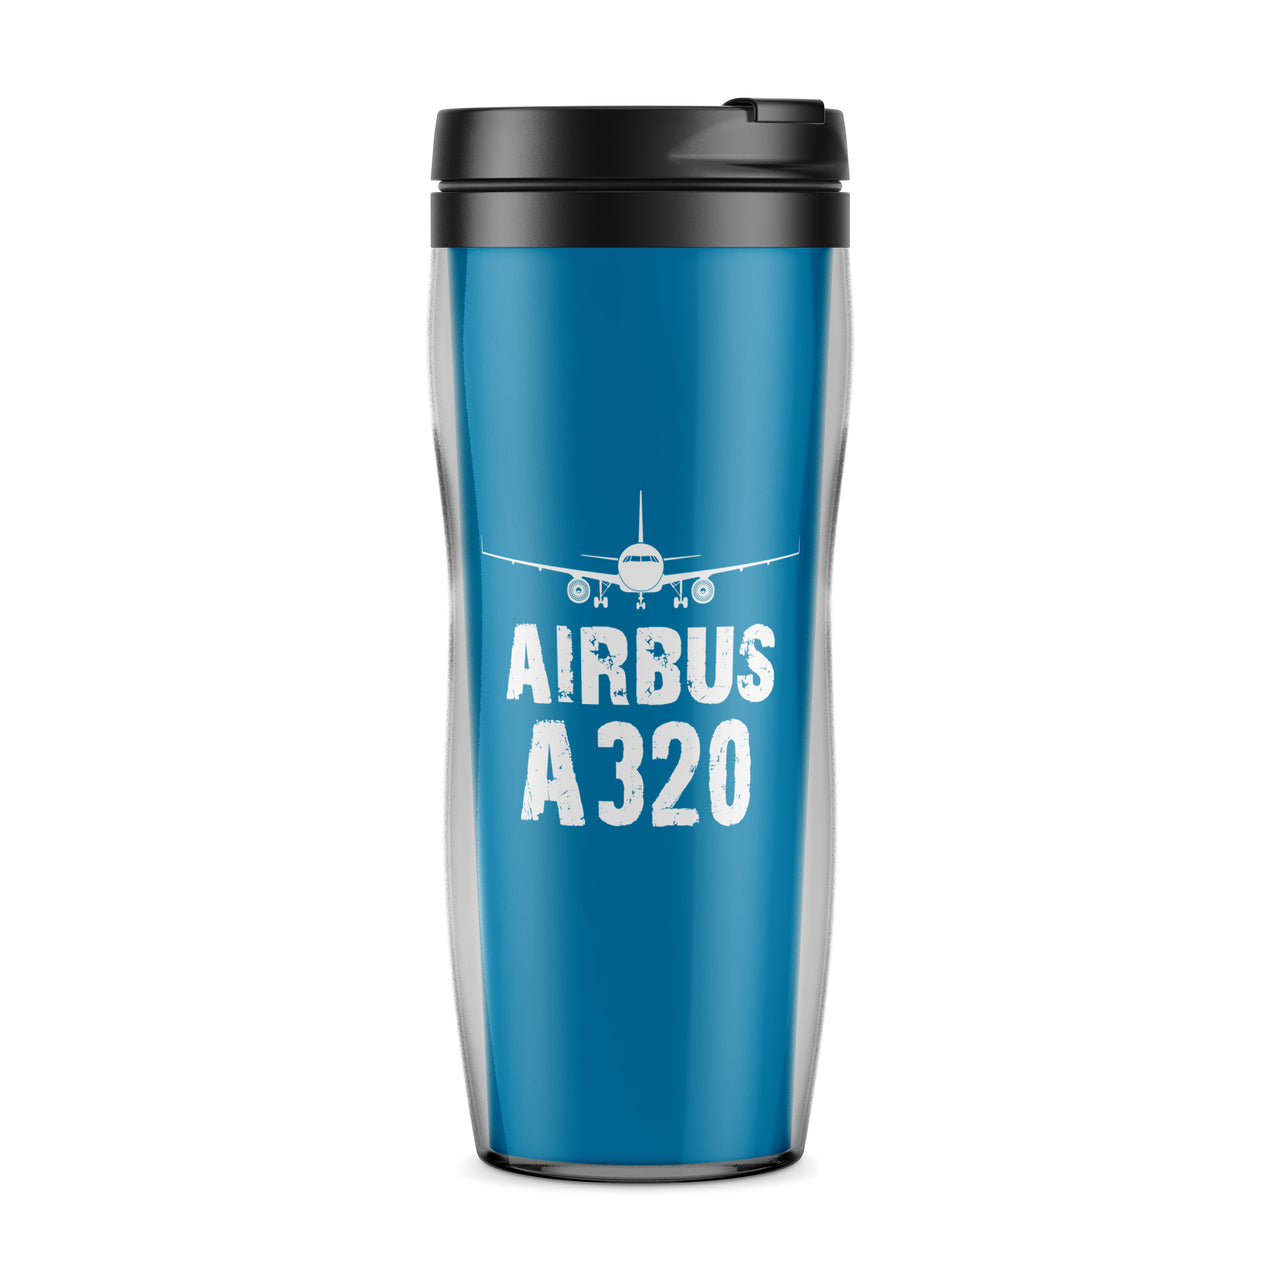 Airbus A320 & Plane Designed Travel Mugs